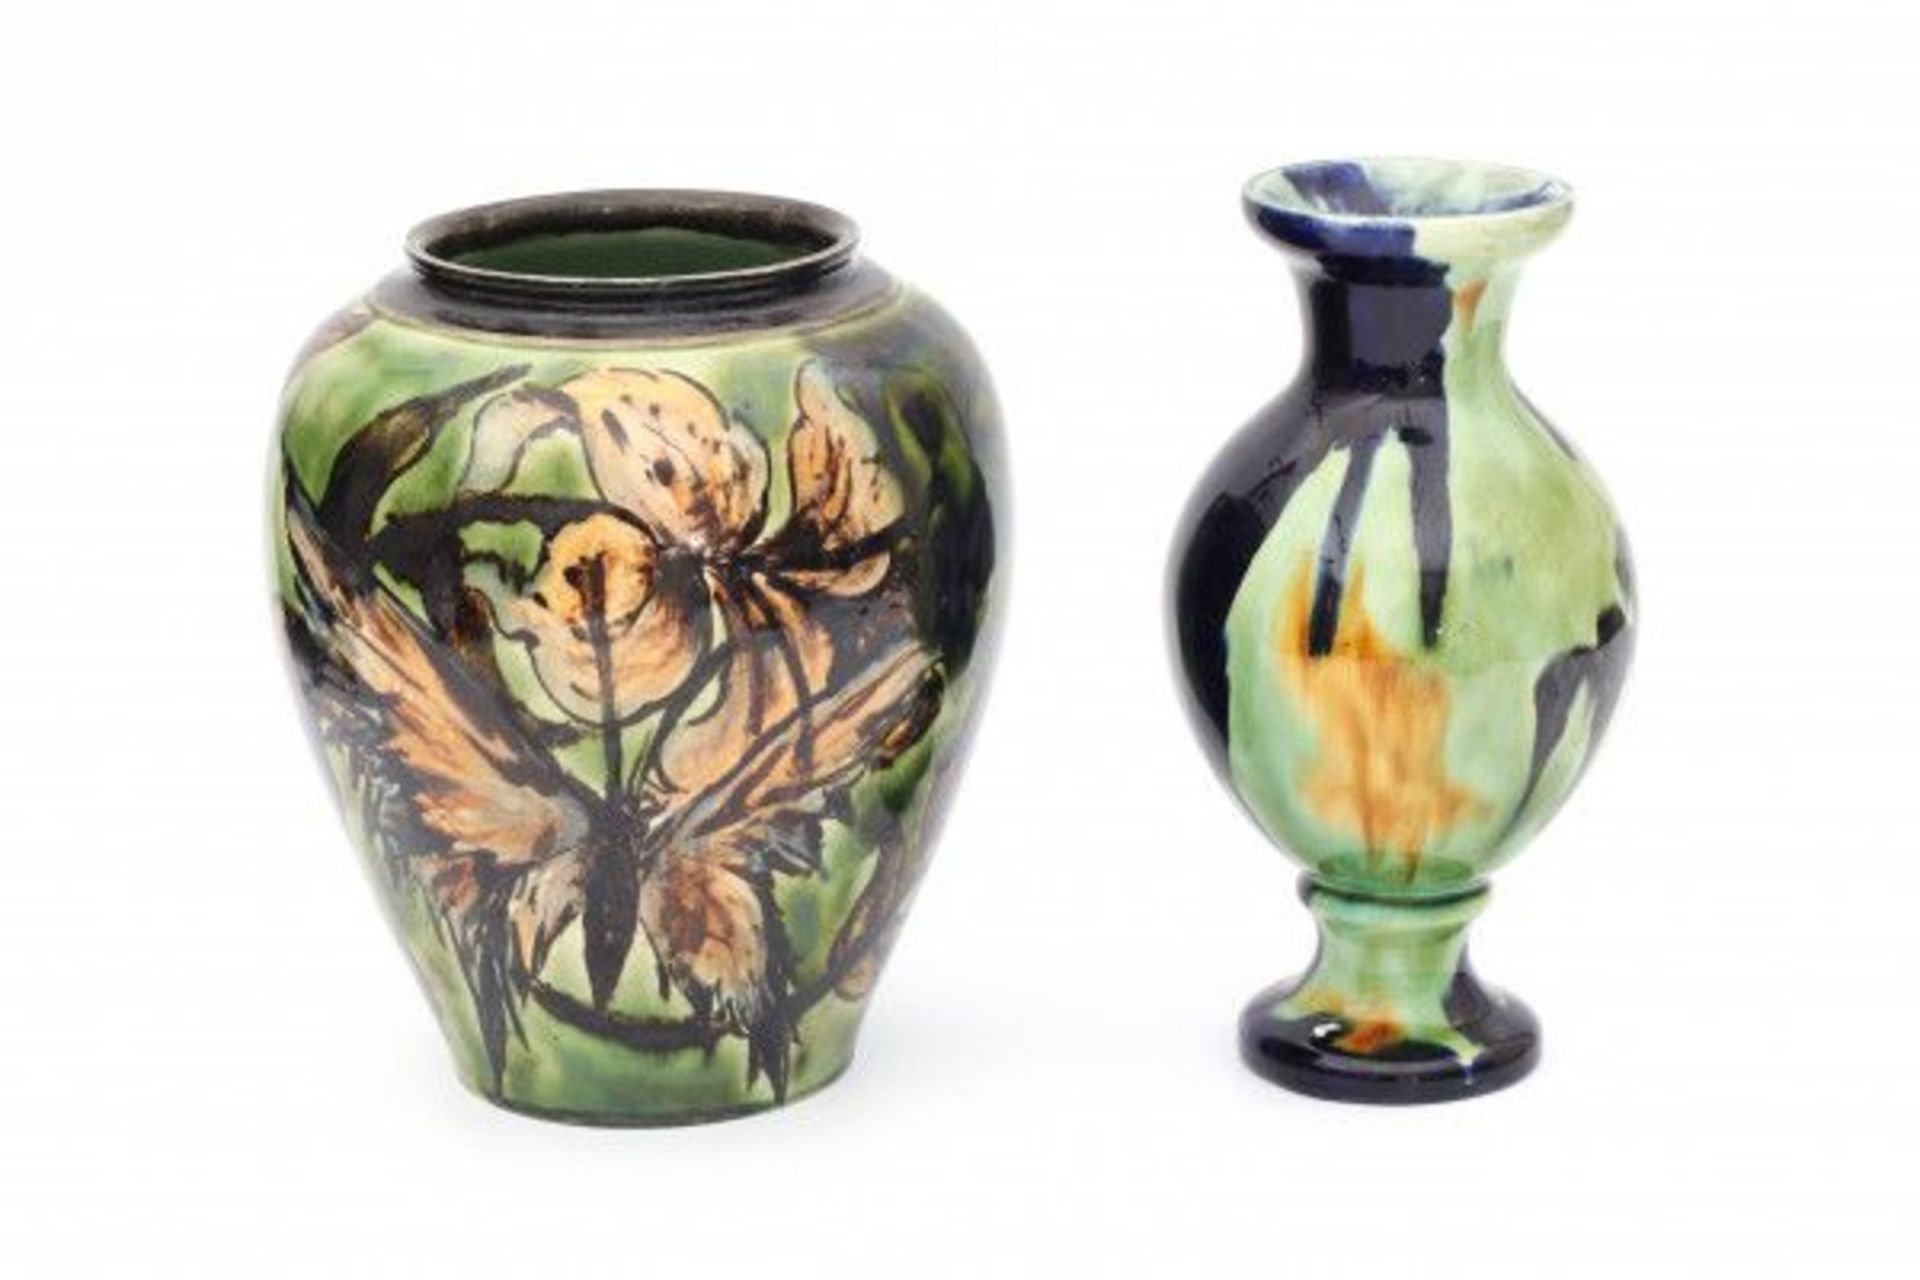 N.V. Haagsche Plateelfabriek Rozenburg, Den Haag (1883-1917)A ceramic vase in green, brown and